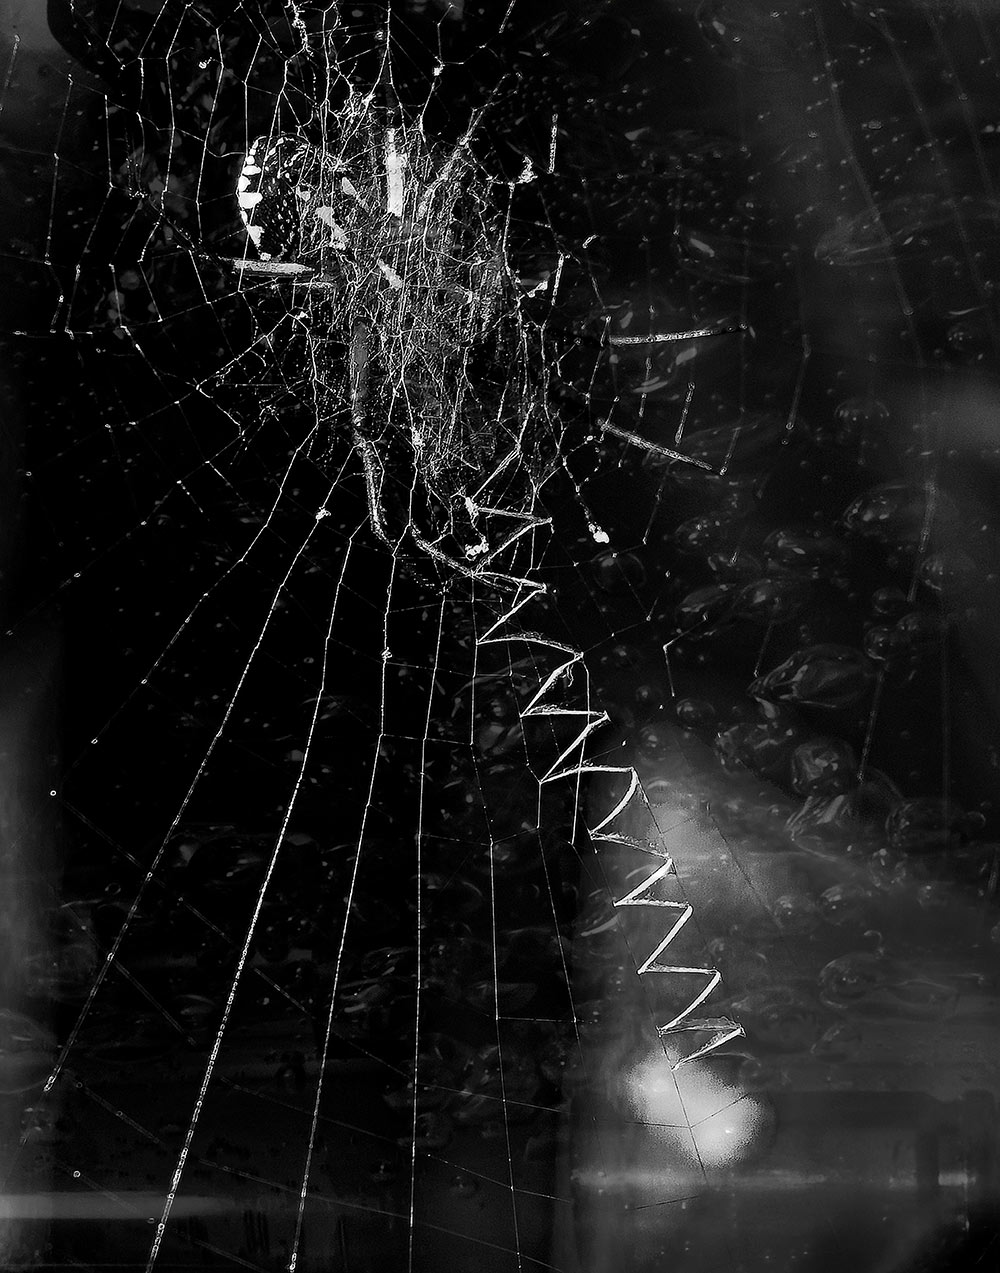 black and white image - looks like spiderweb